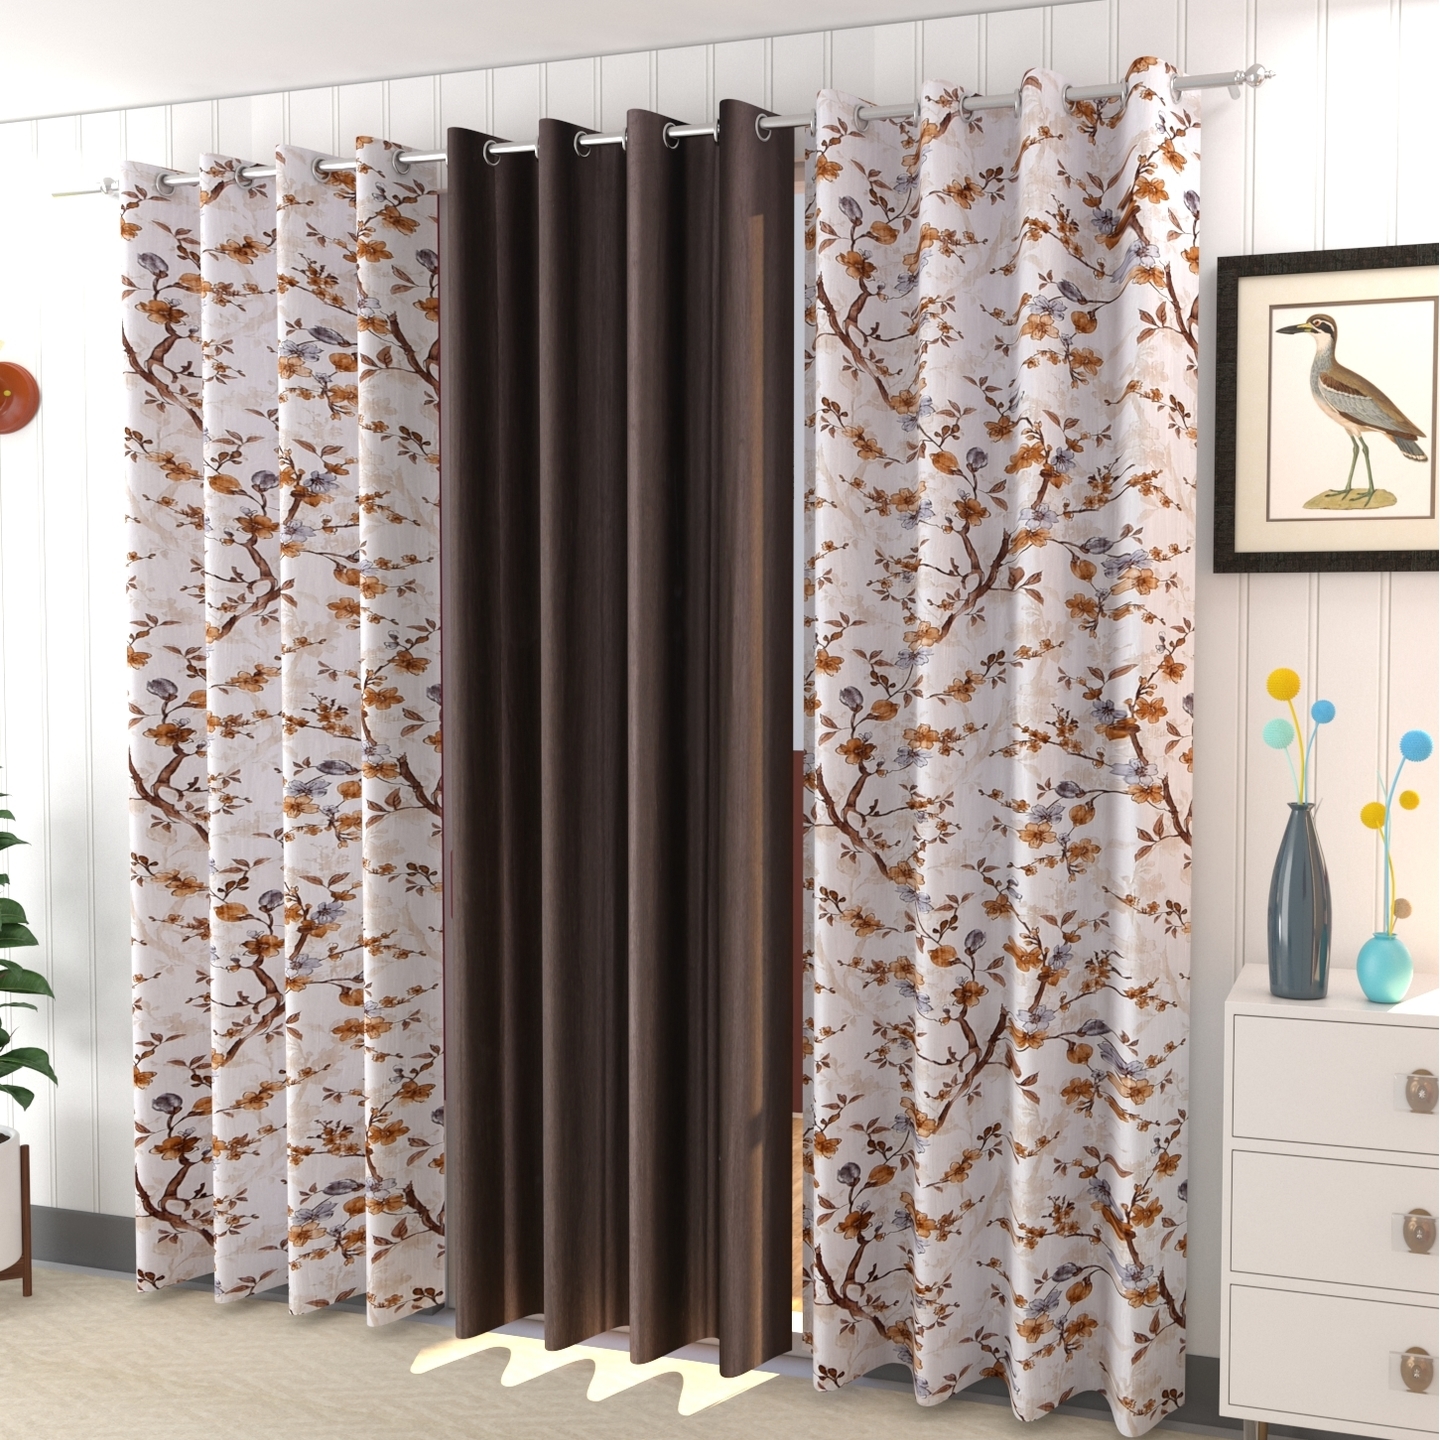 Handtex Home Polyester Digital Print Eyelet Curtain Set of 3 Pcs 4feet x 9feet Coffee